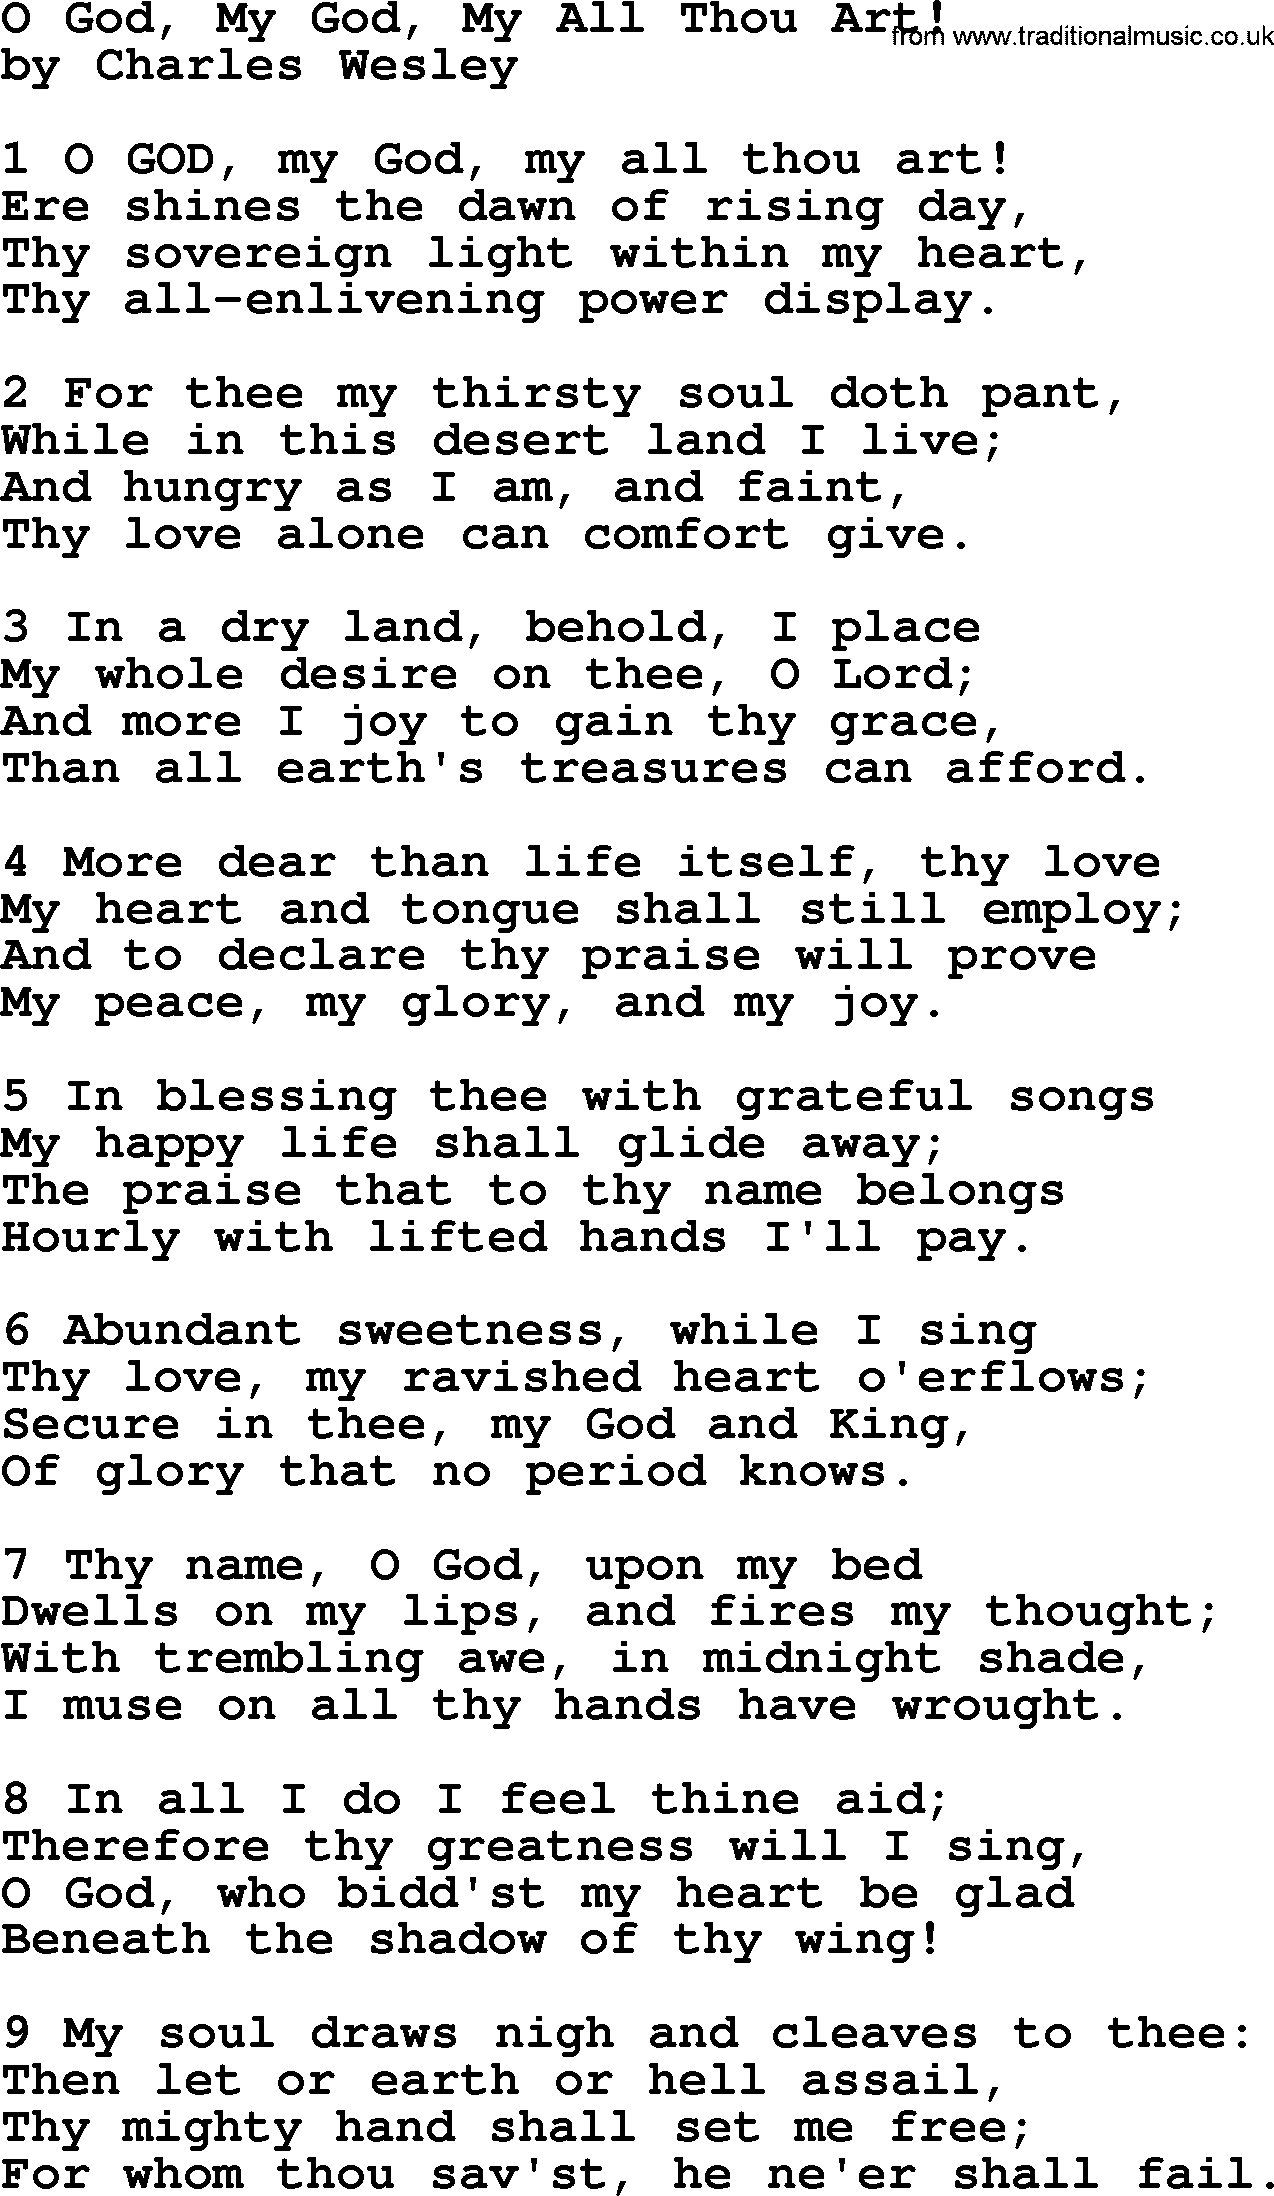 Charles Wesley hymn: O God, My God, My All Thou Art!, lyrics